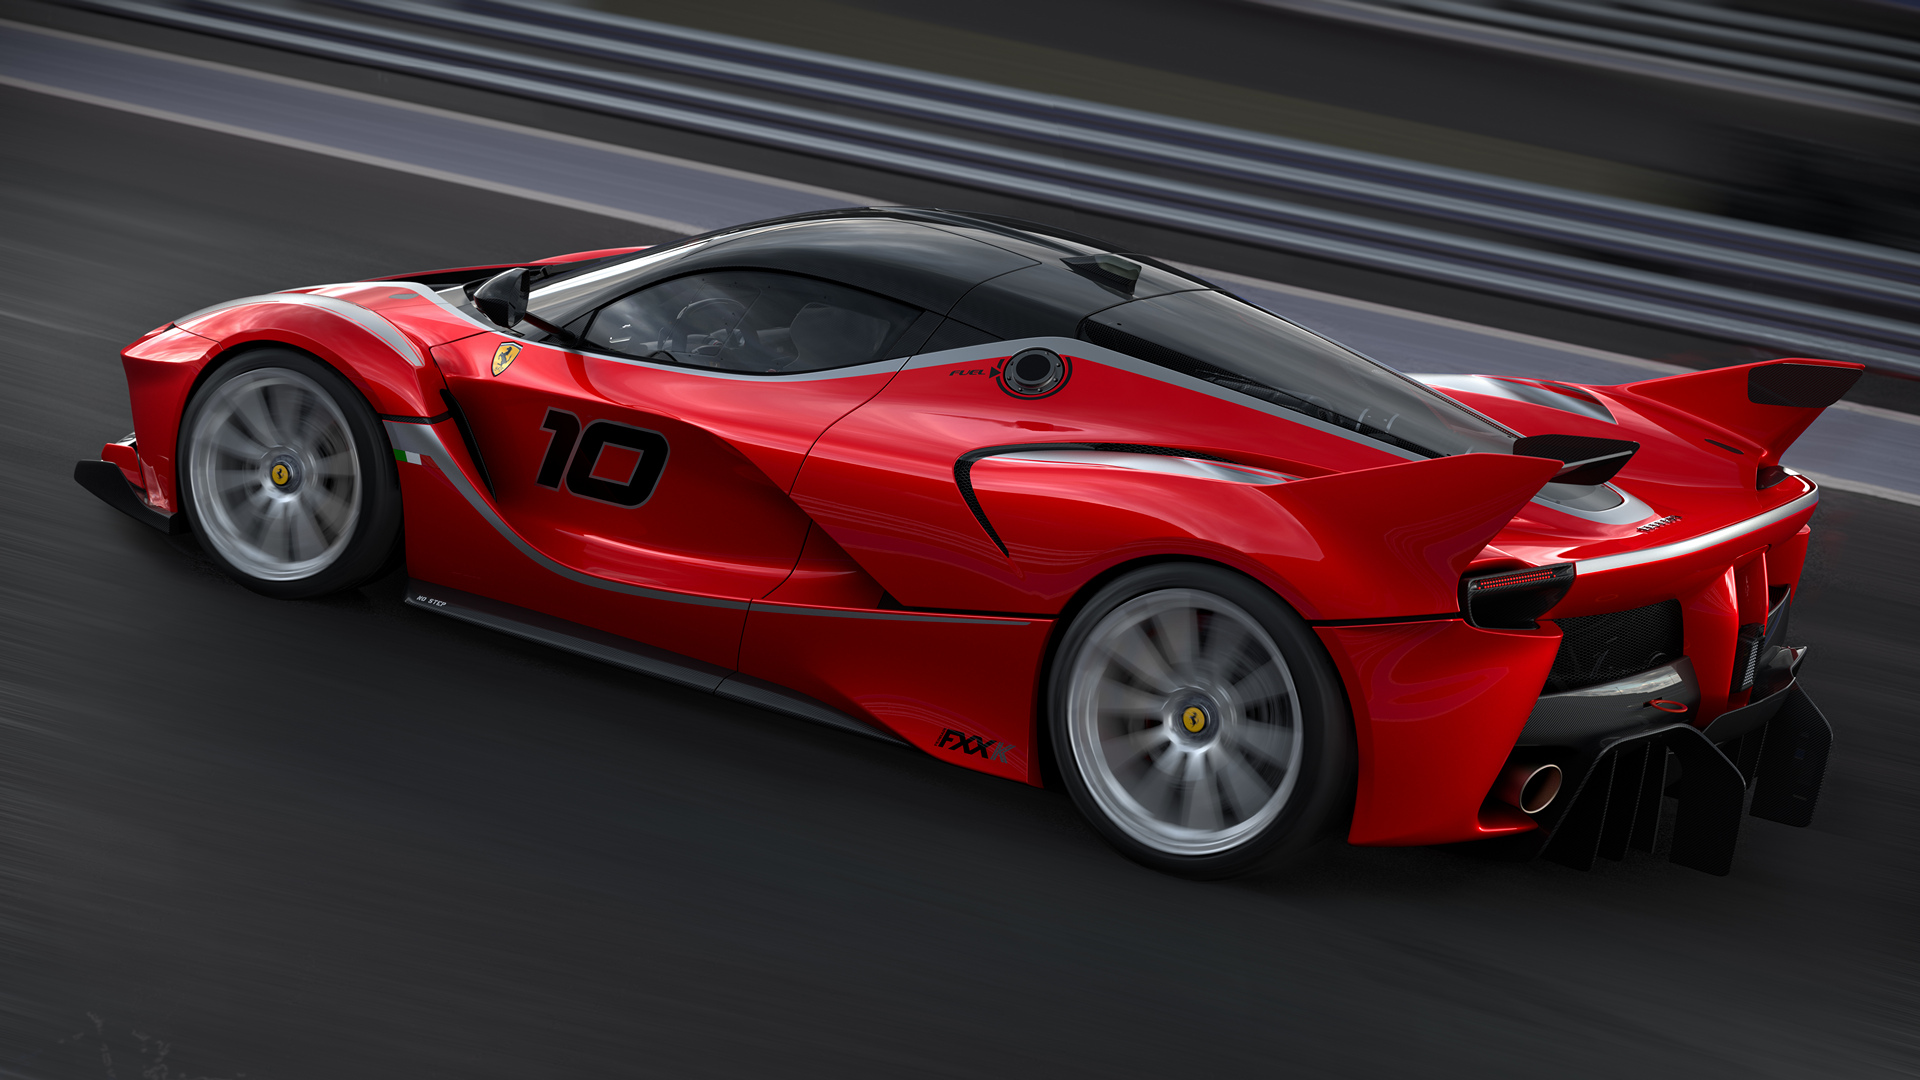 Ferrari FXX K © Ferrari S.p.A.